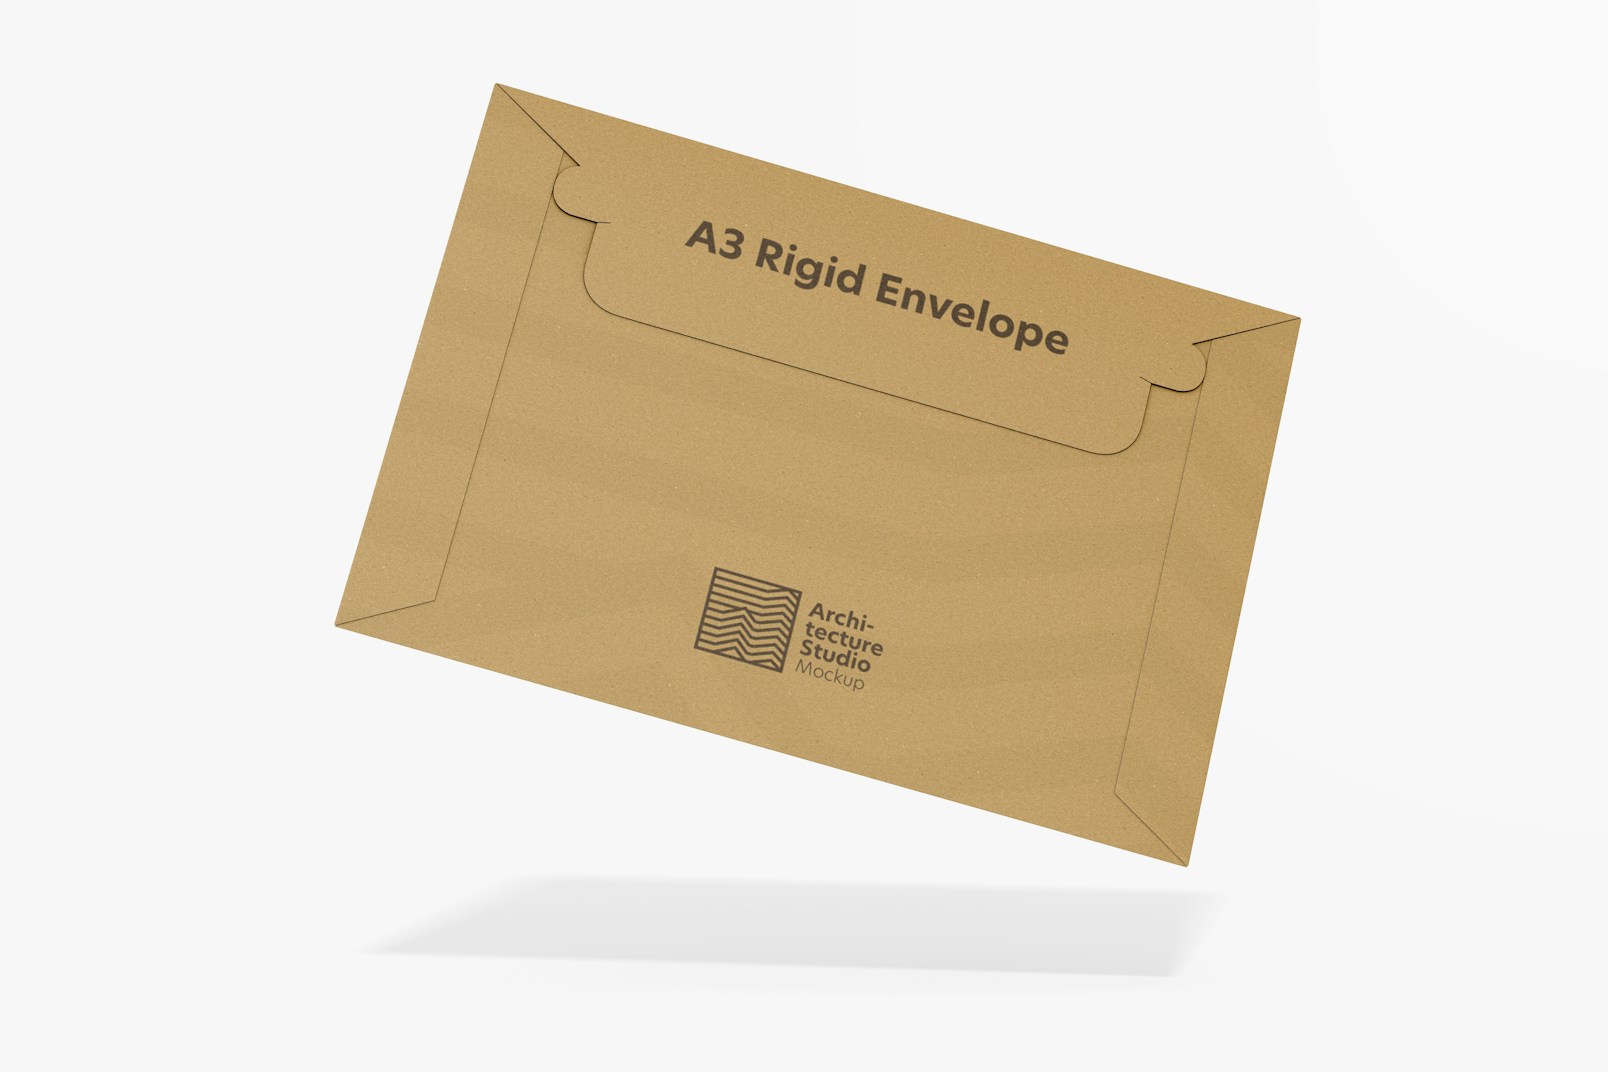 A3 Rigid Cardboard Envelope Mockup